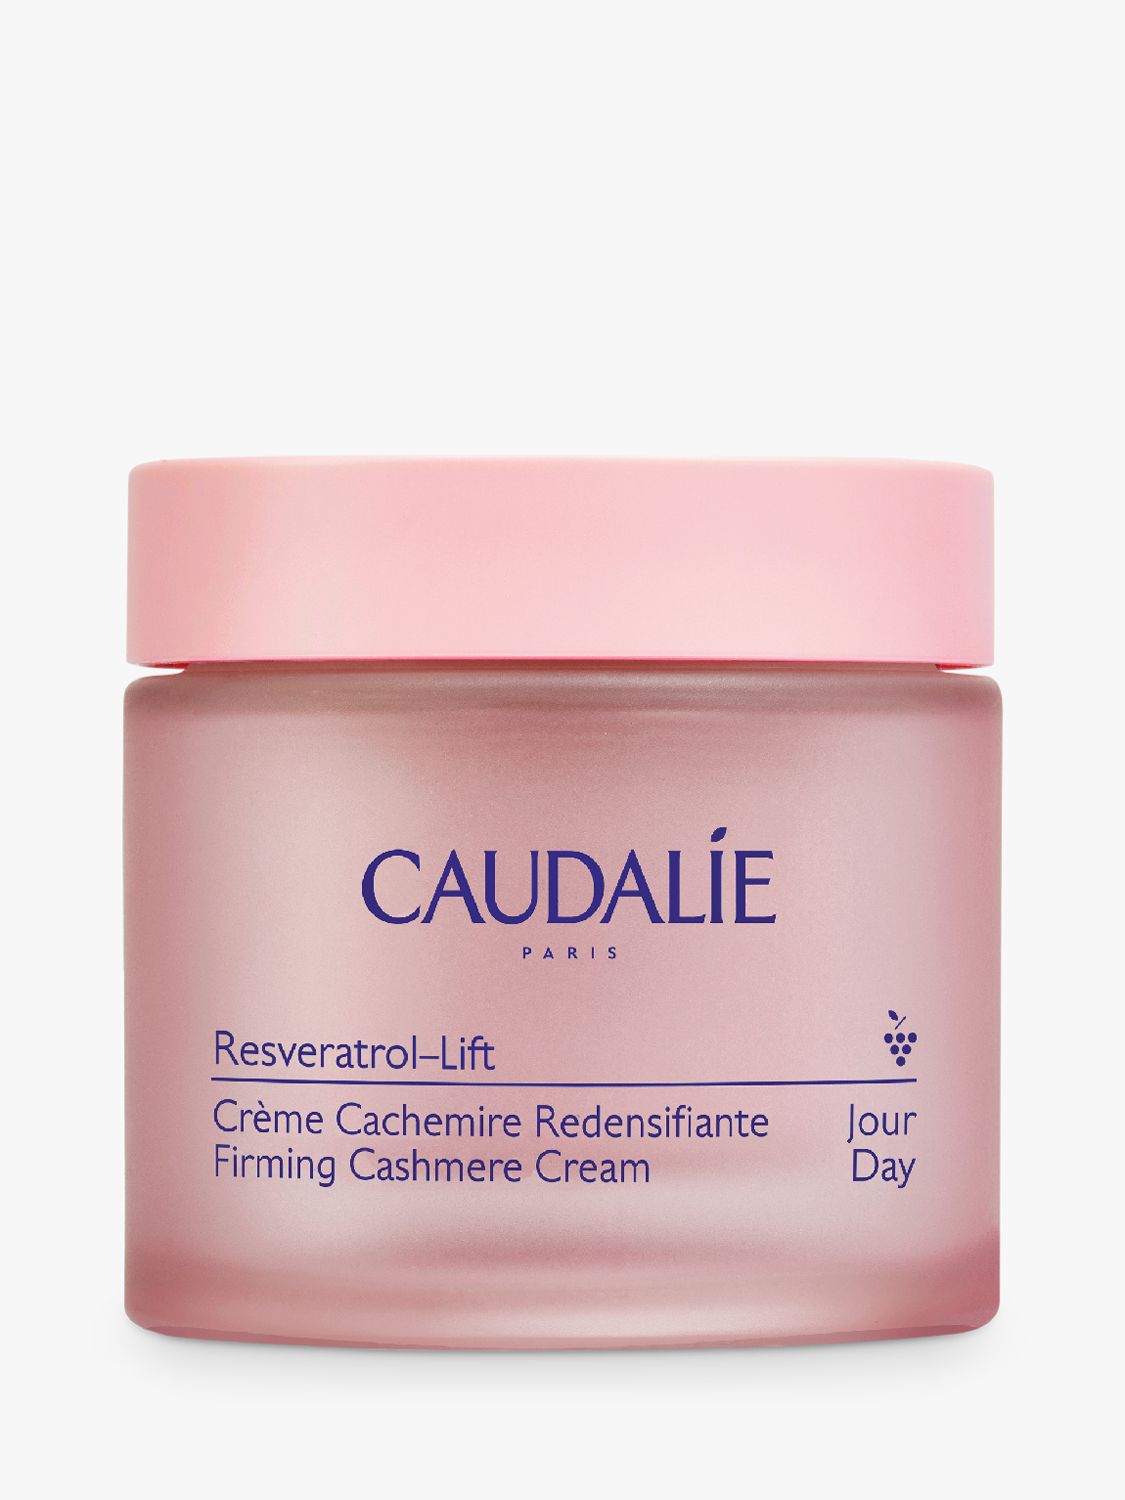 Caudalie Resveratrol-Lift Firming Cashmere Cream, 50ml 1